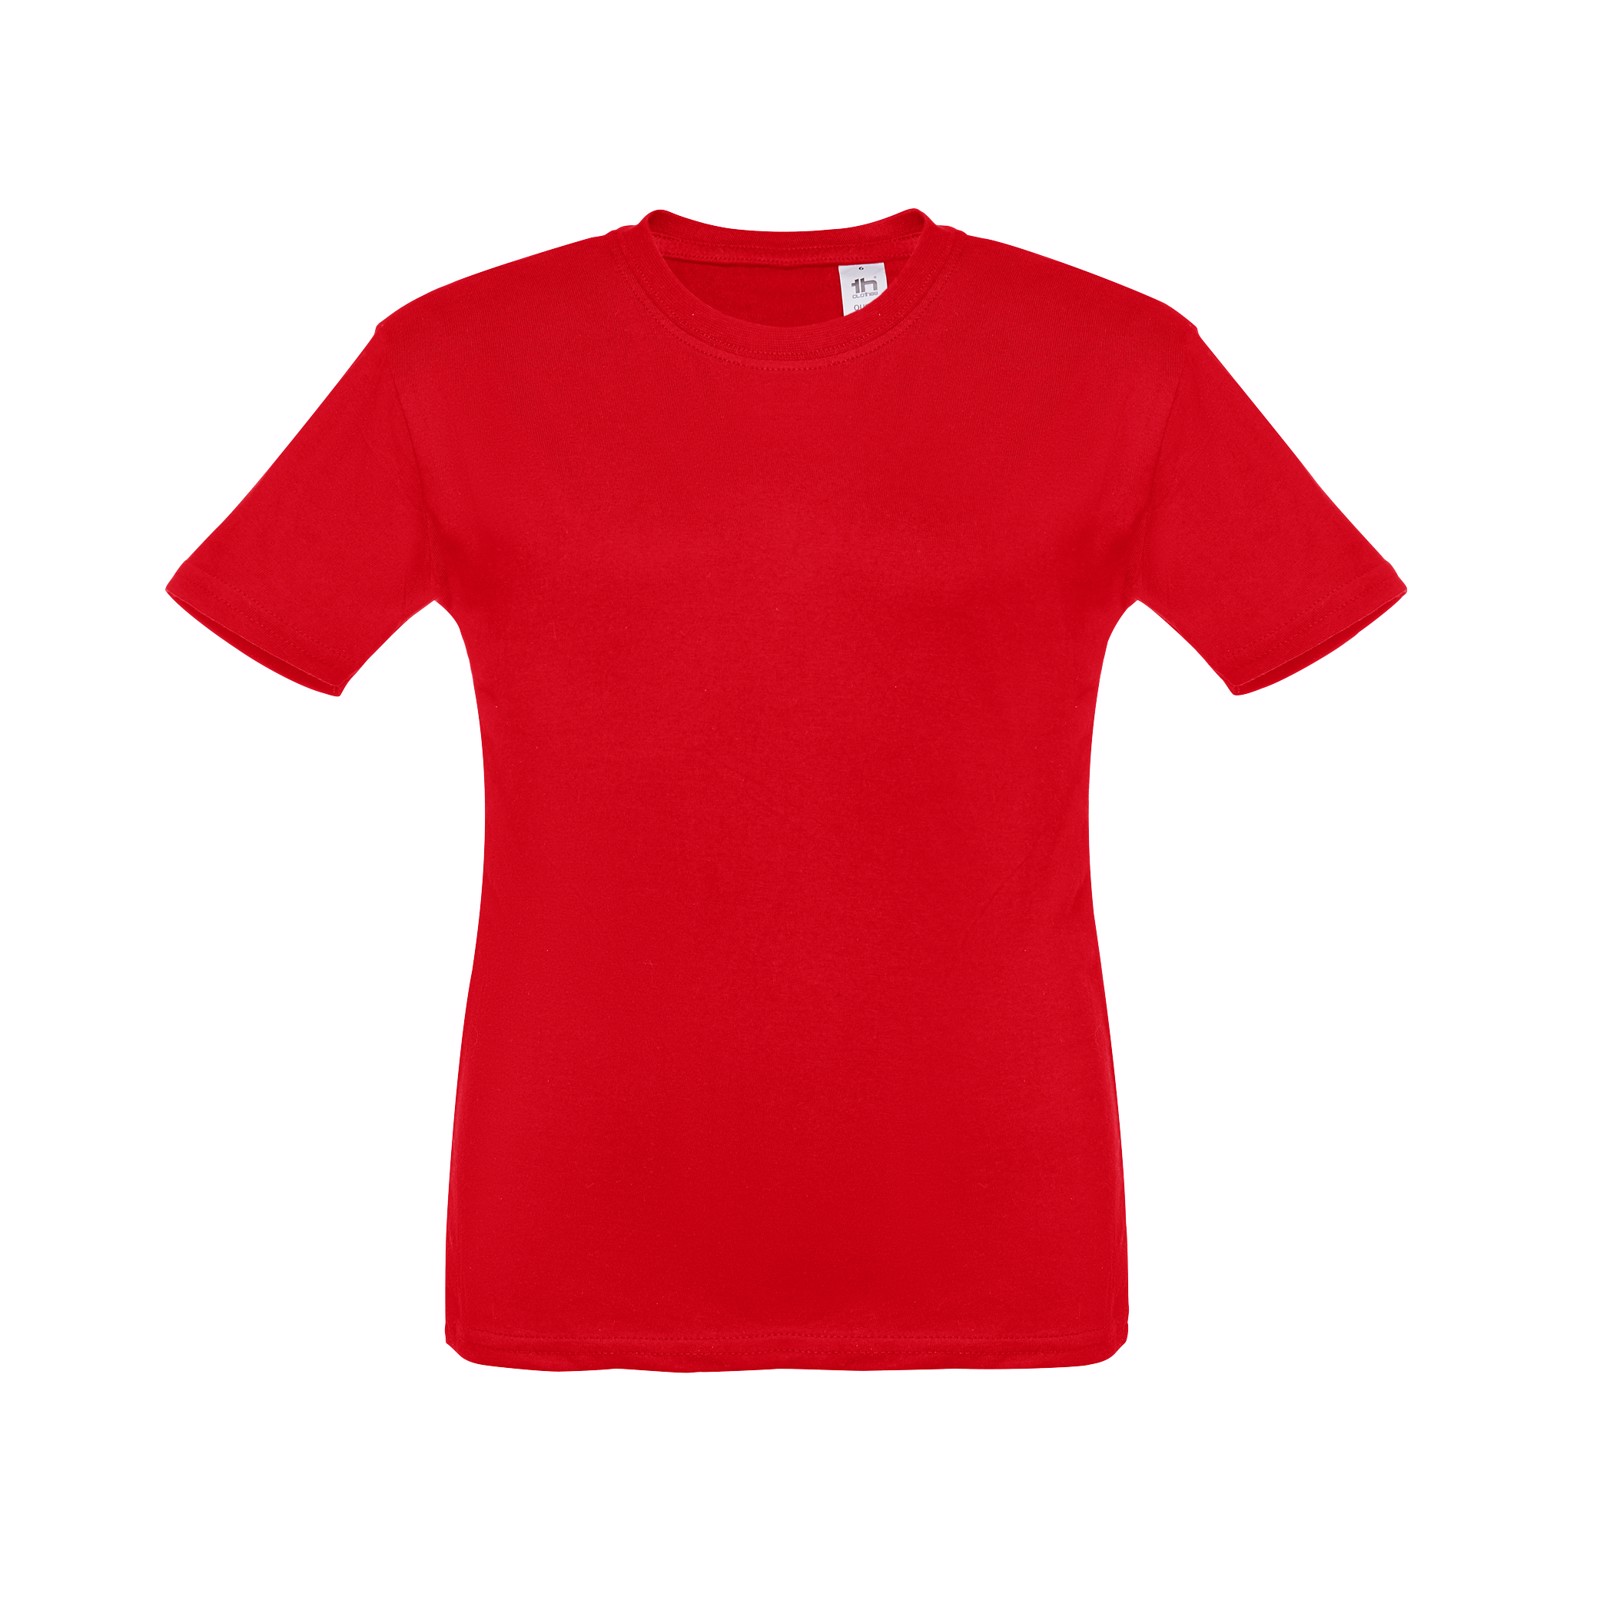 THC ANKARA KIDS. Children's t-shirt - Red / 6